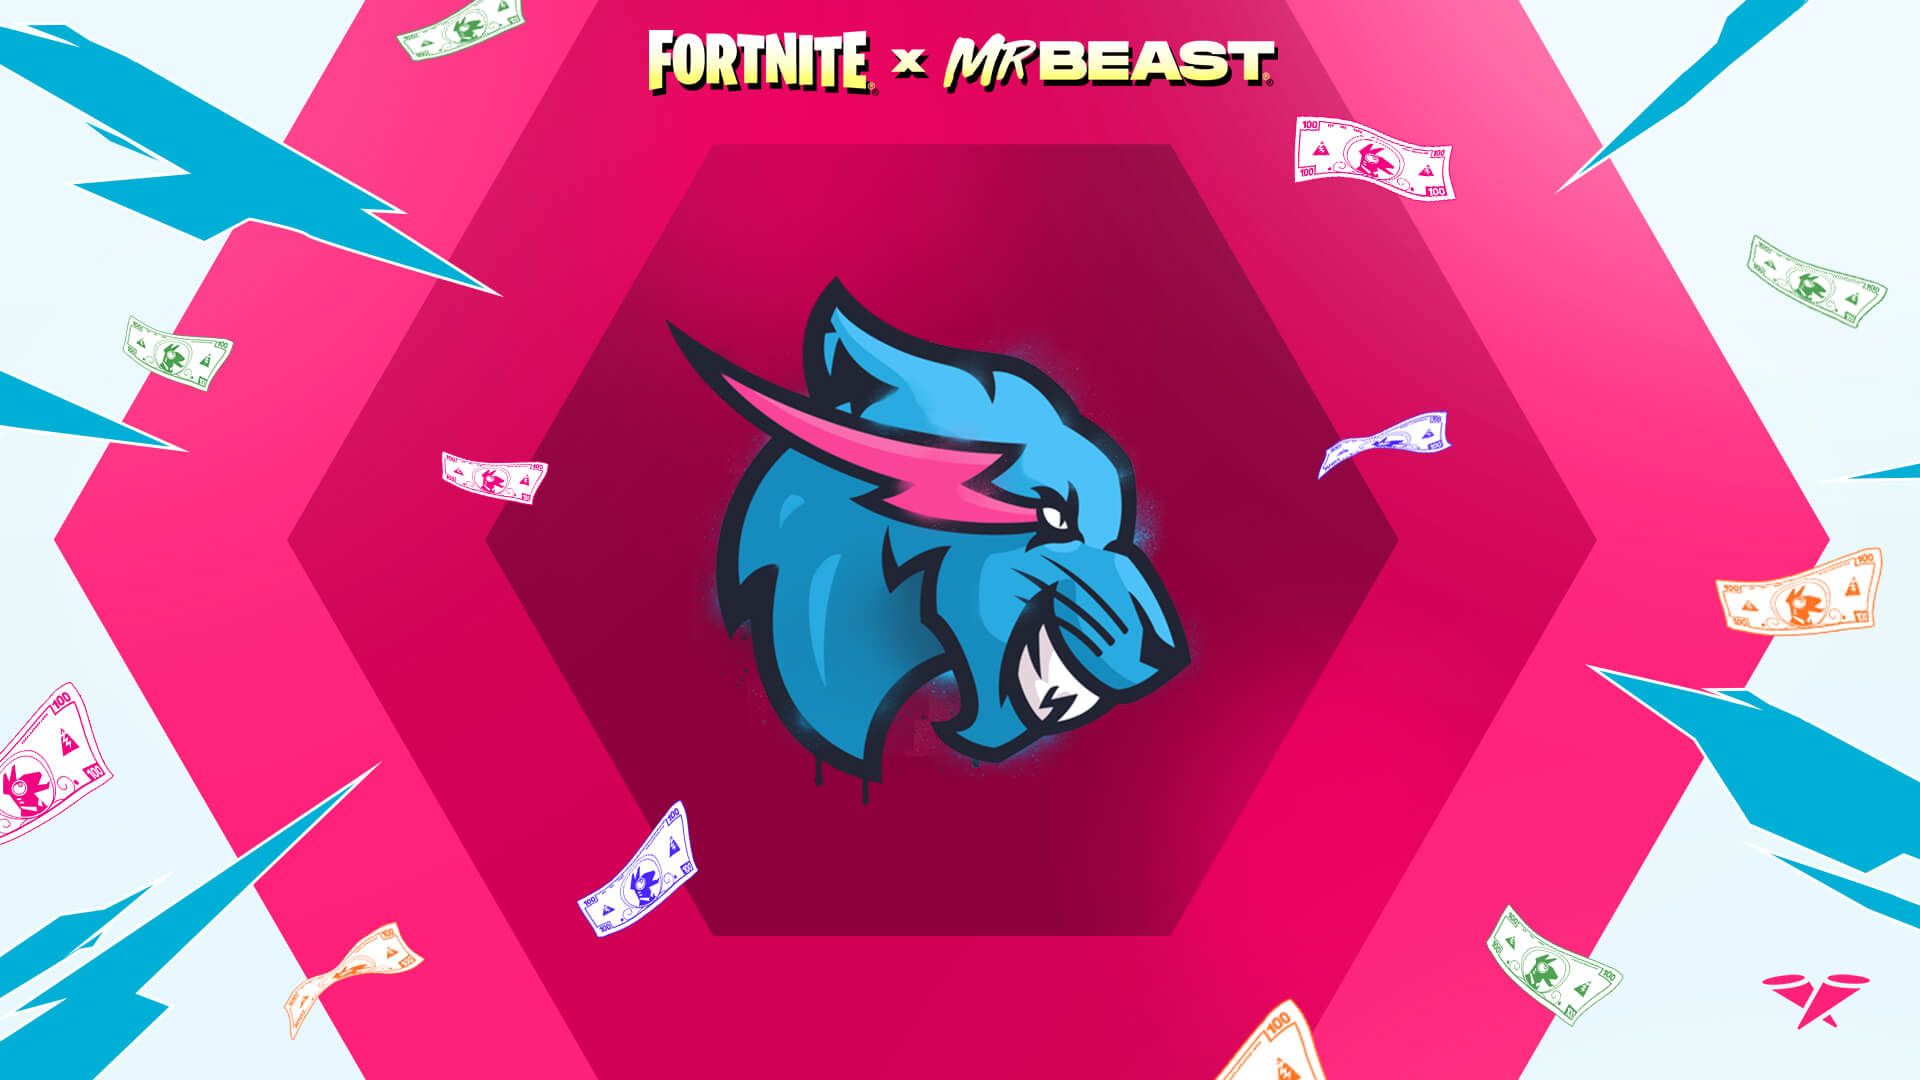 Mr Beast Fortnite tournament